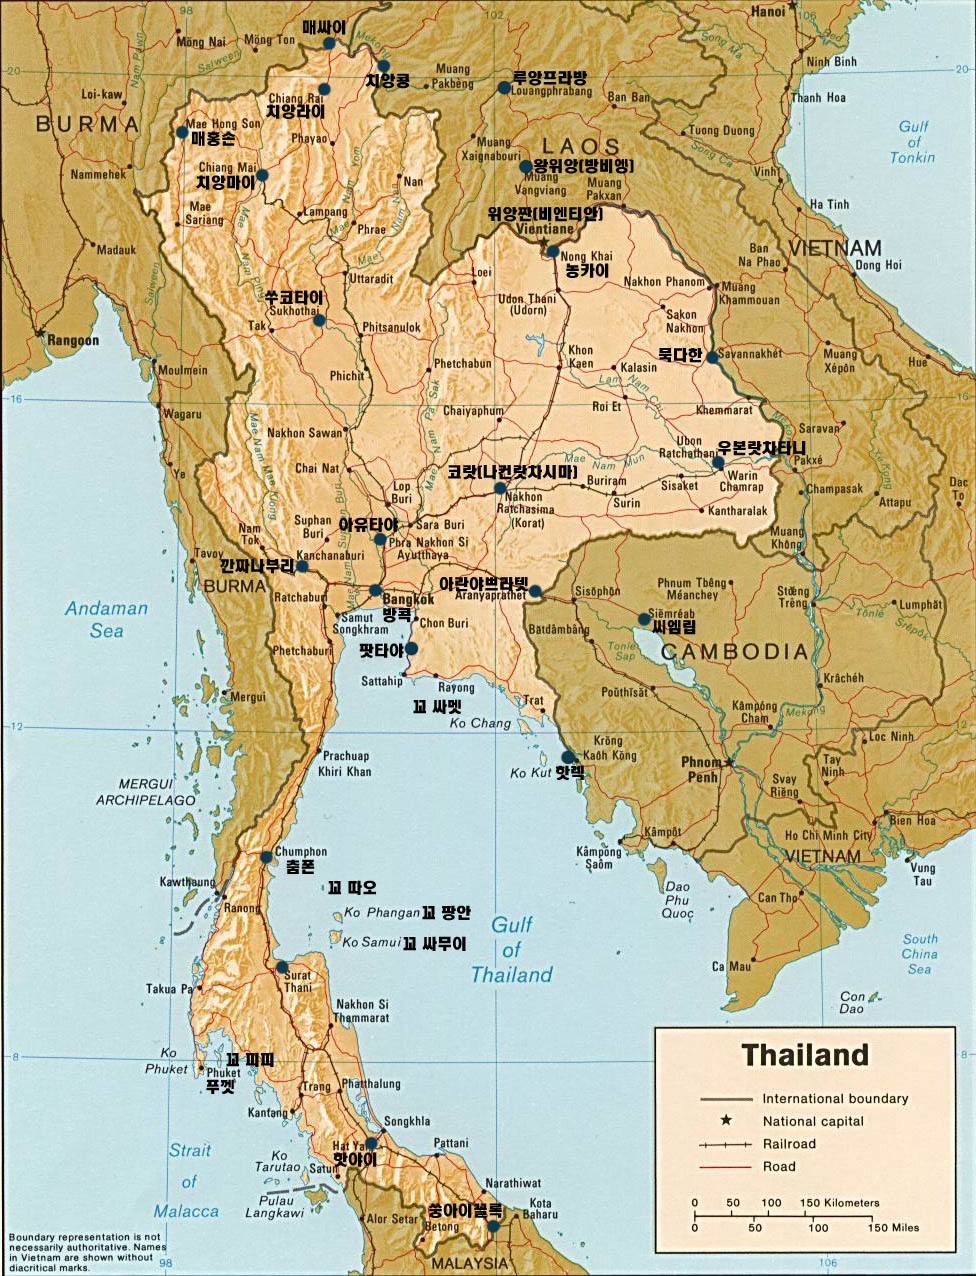 Thailand.jpg